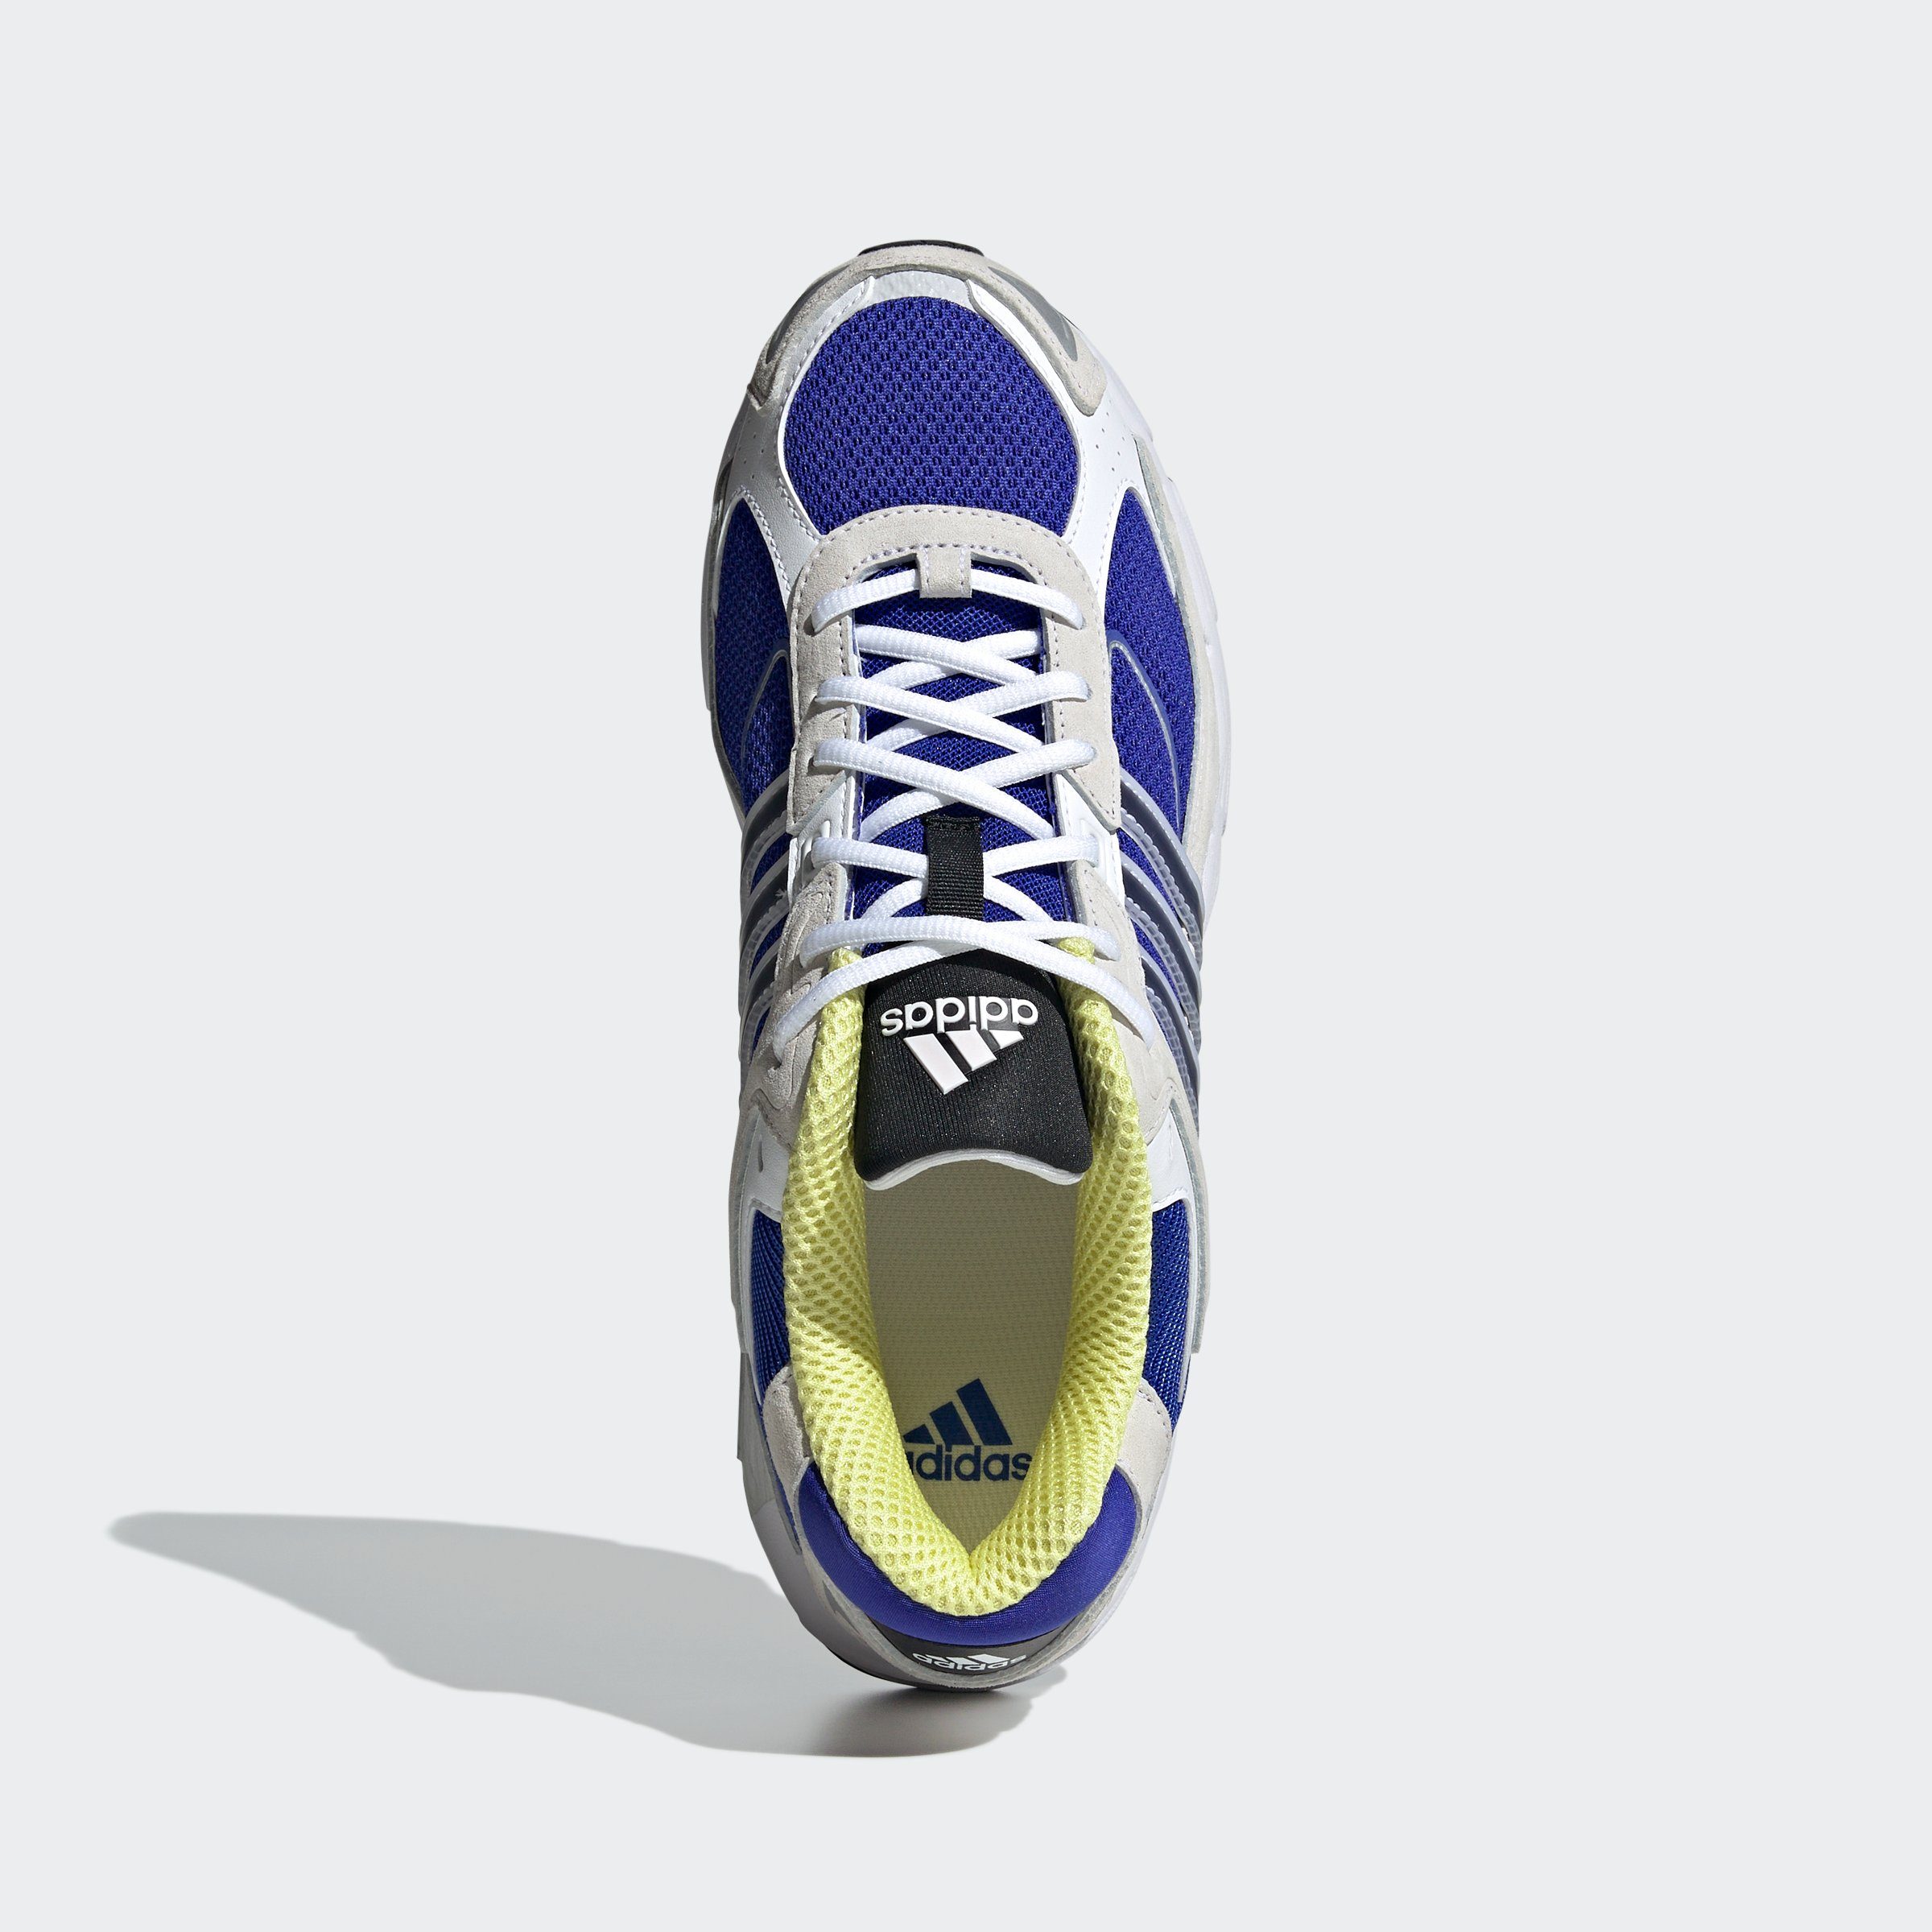 adidas Originals RESPONSE CL Blue Black Sneaker White / Lucid Core / Cloud